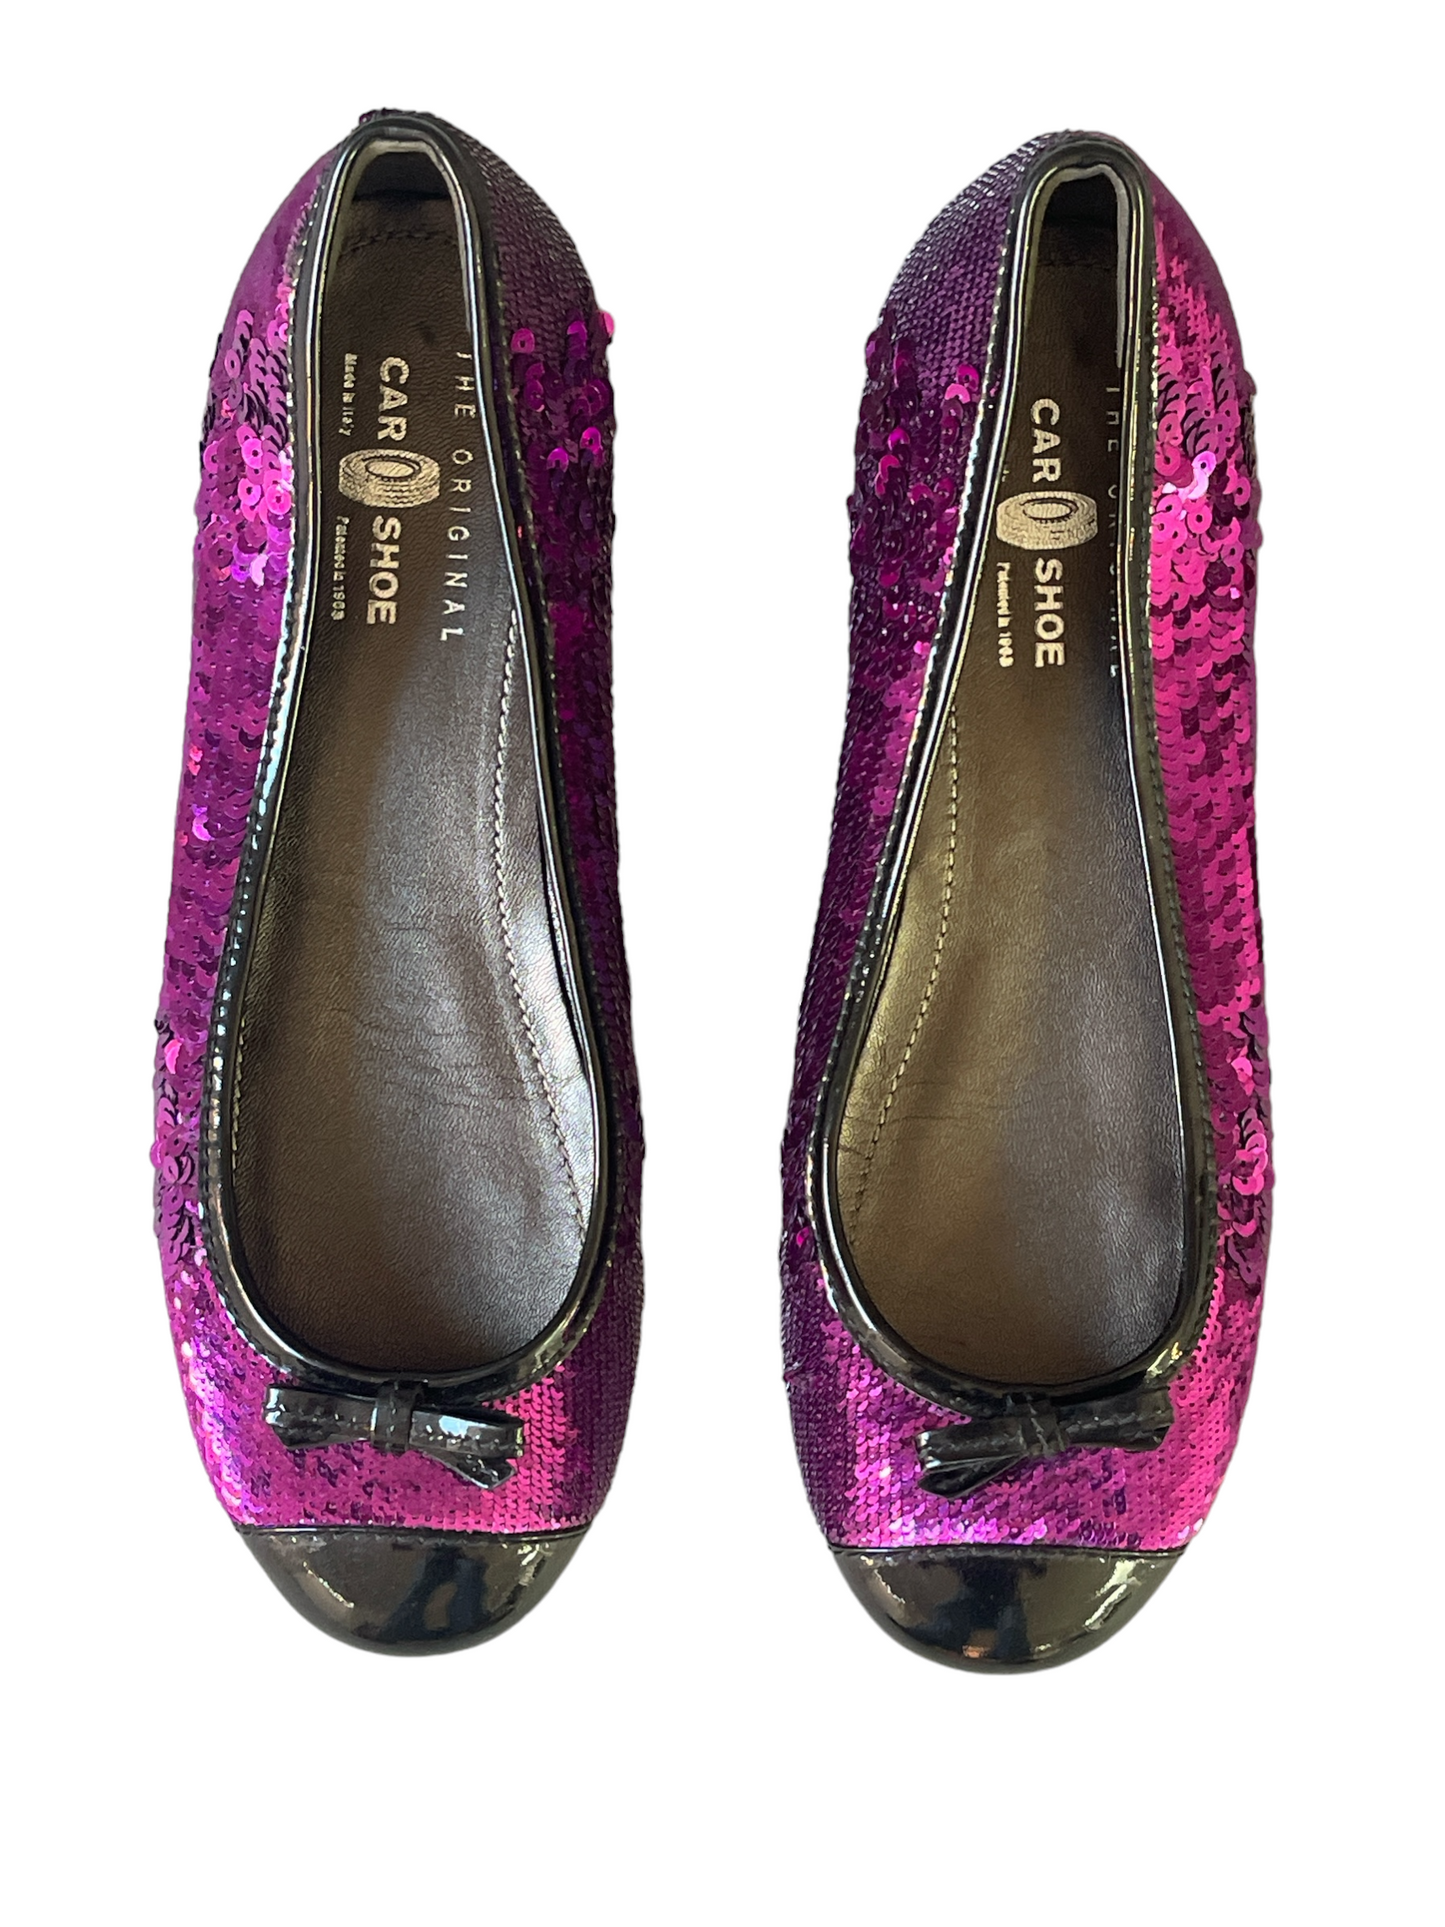 Prada The Original Car Shoe Purple Sequin Ballet Flats - Size 38.5 (New)